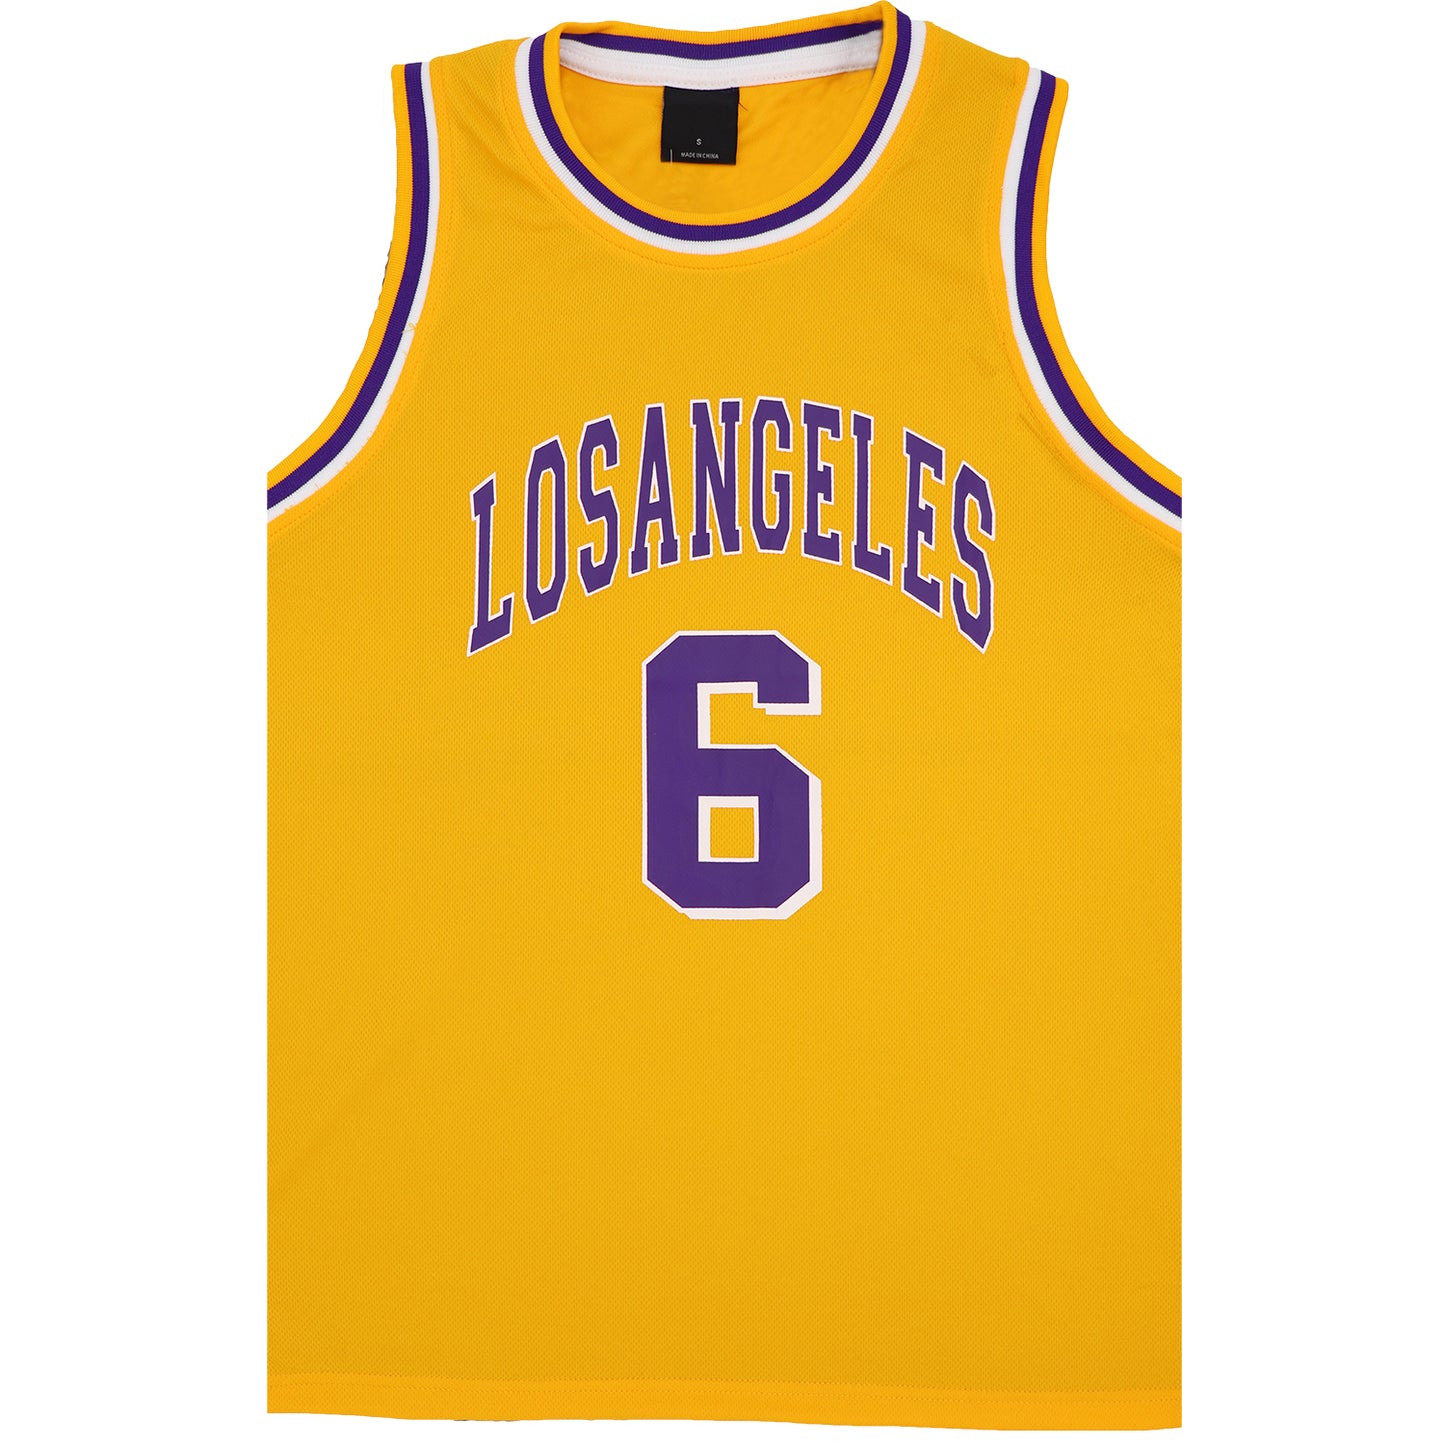 Kid's Basketball Jersey Tank Boys Sports T Shirt Tee Singlet Tops Los Angeles, Royal Blue - Golden State 30, 4